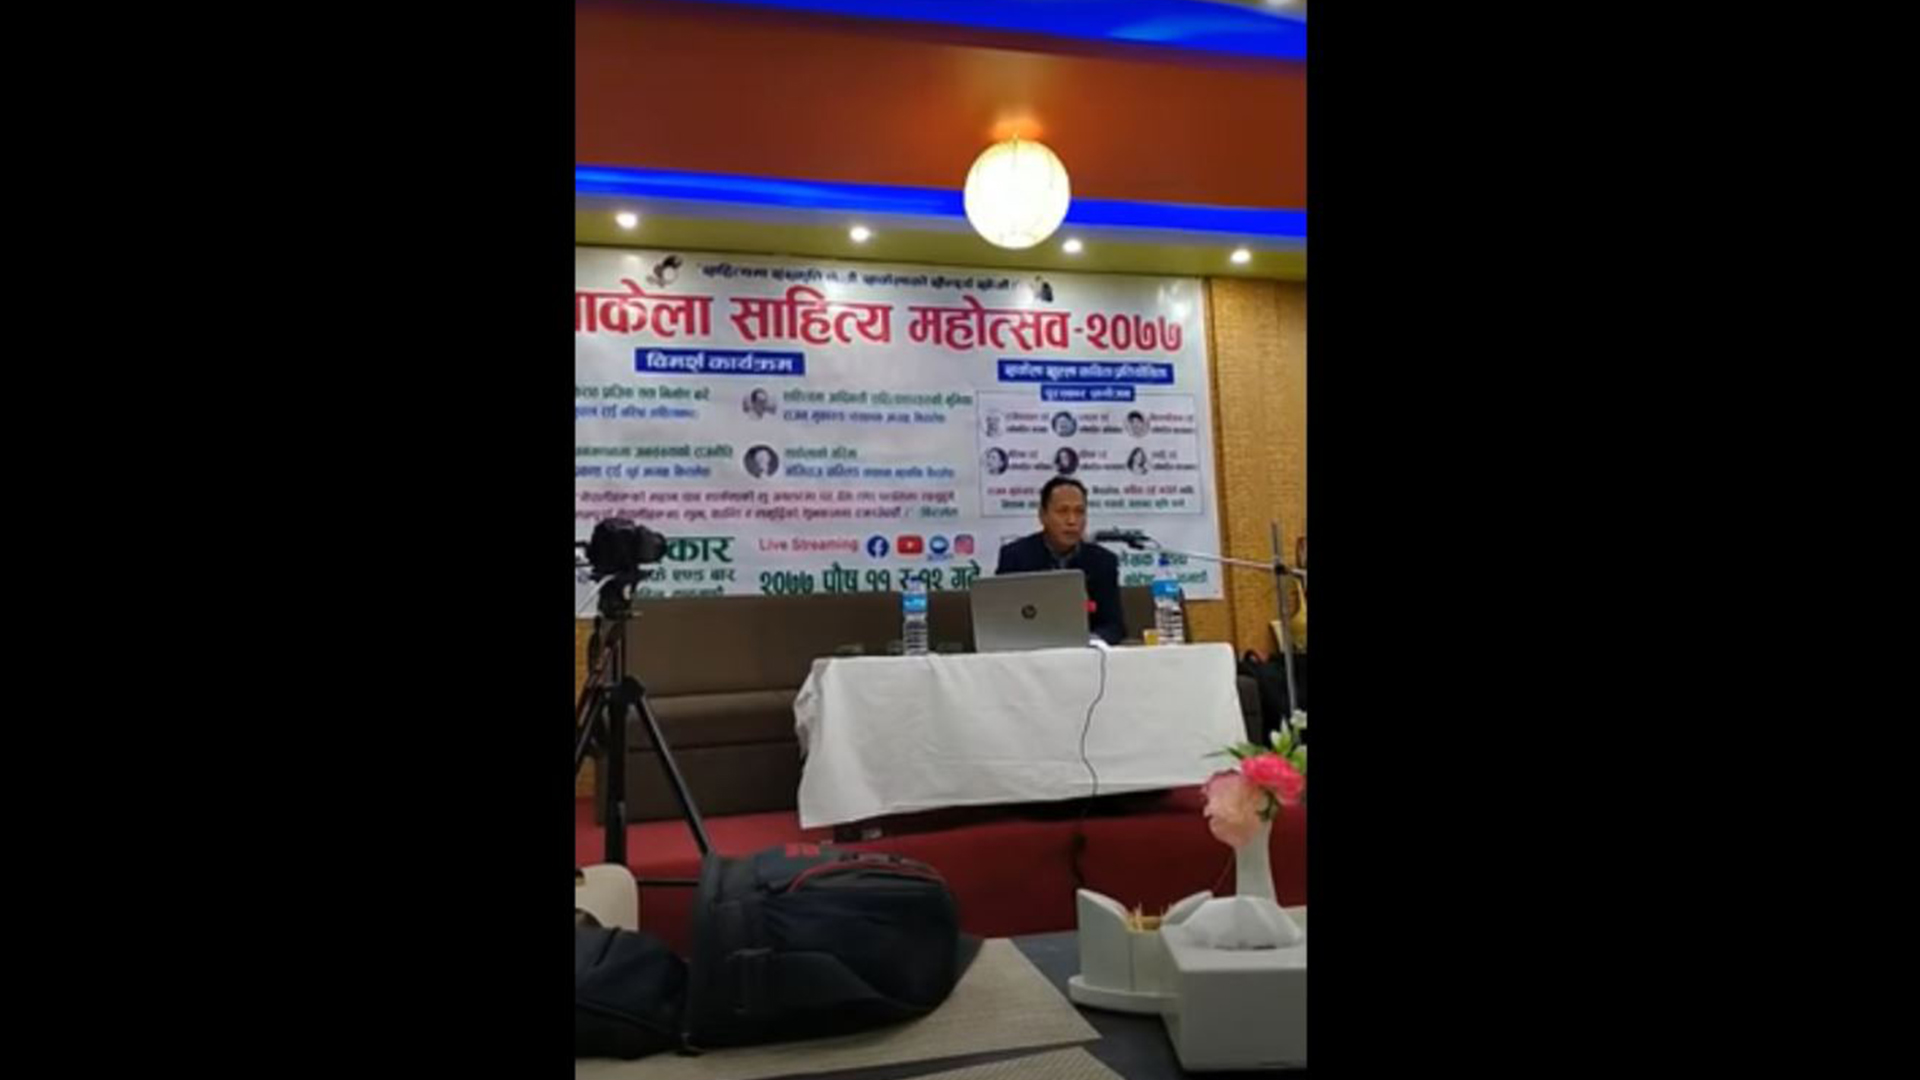 On the occasion of Udhauli, "Sakela Sahitya Mahotsav 2077" started in Kathmandu from Saturday